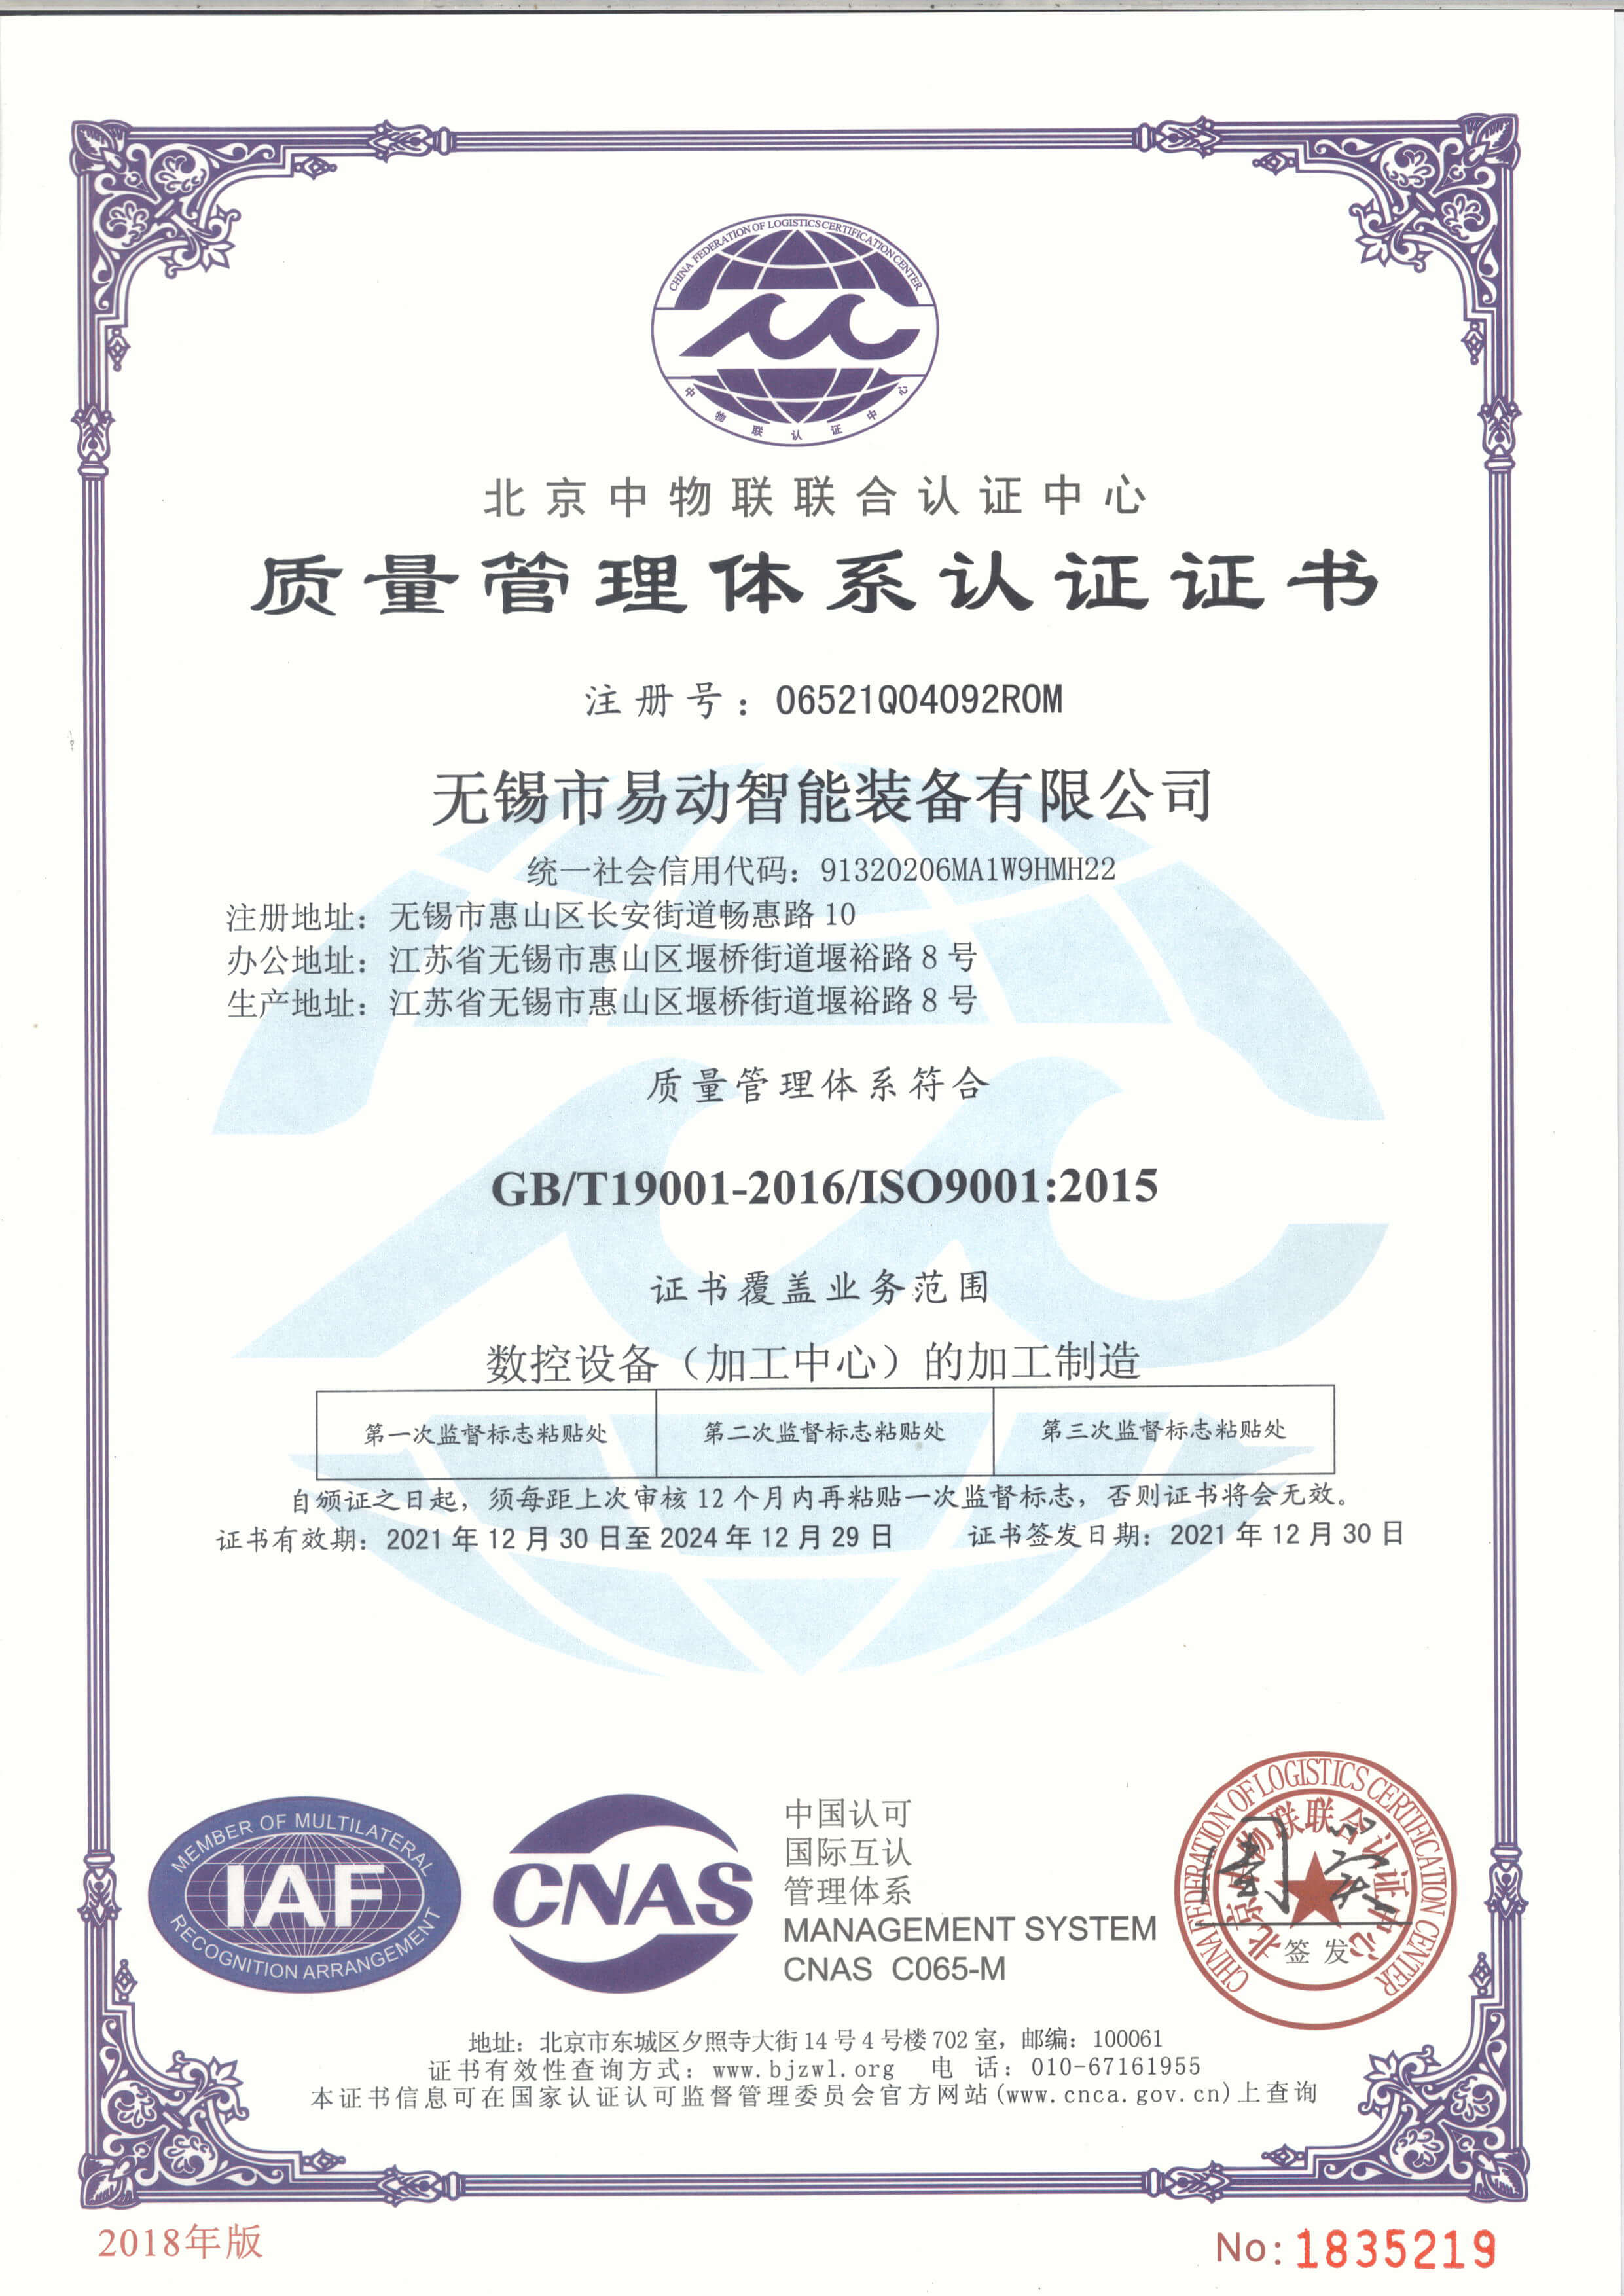 諸暨ISO9001證書